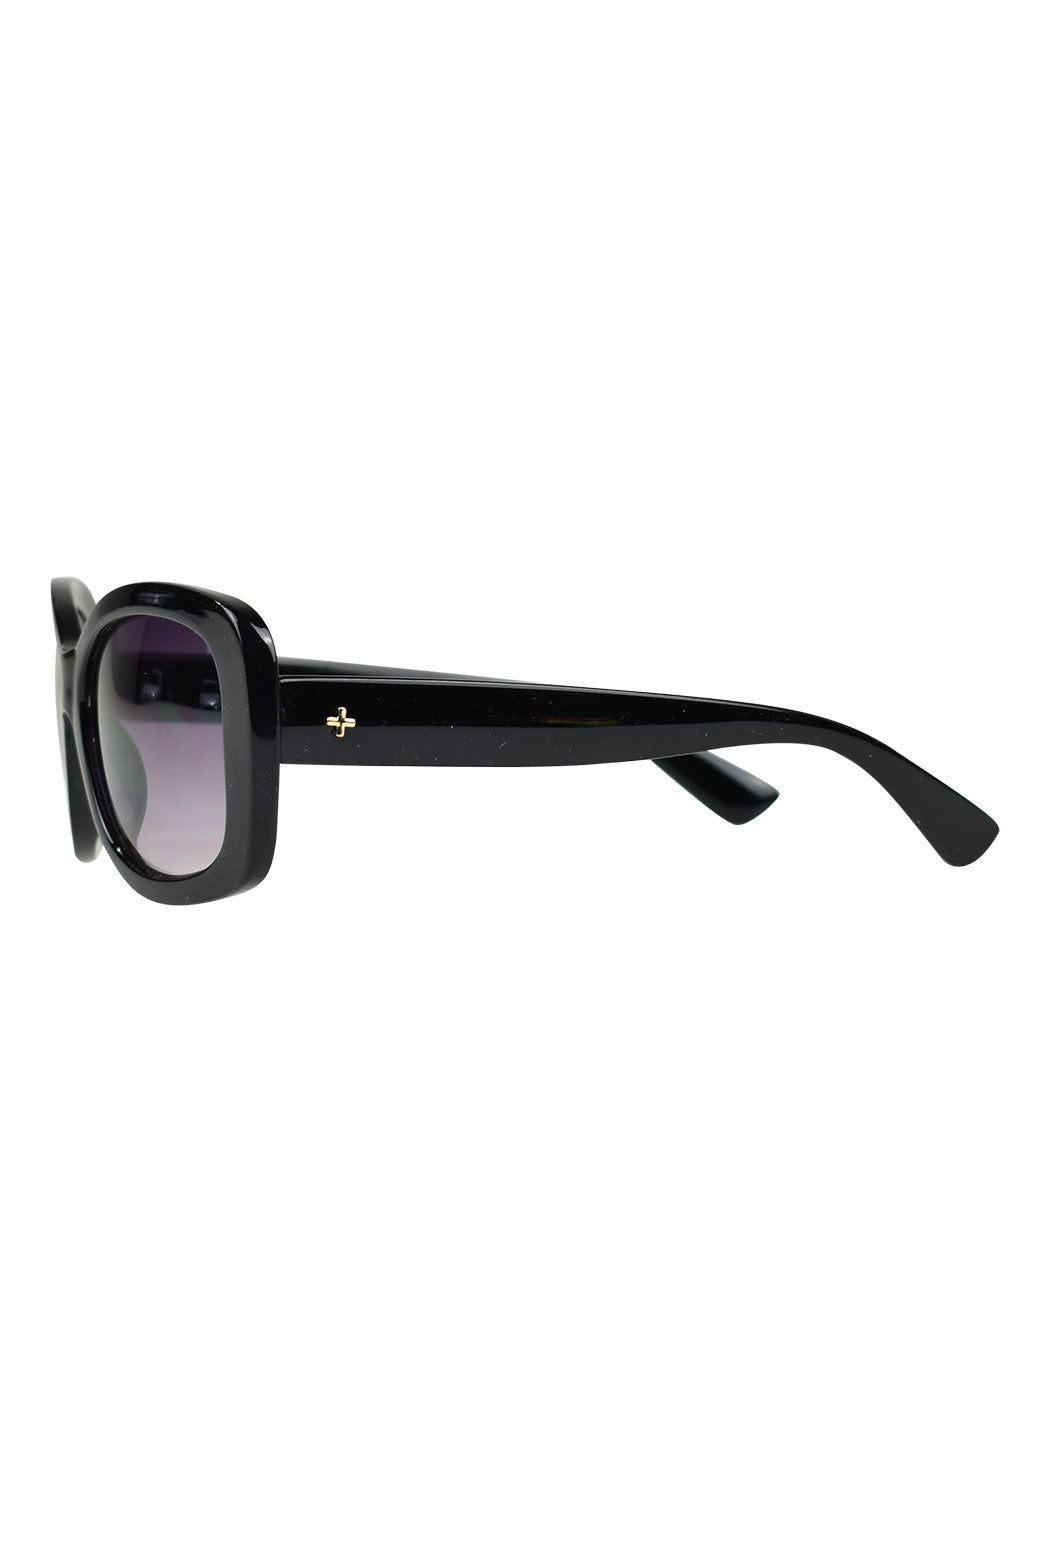 FINAL SALE Peta + Jain Tiffany Black Sunglasses